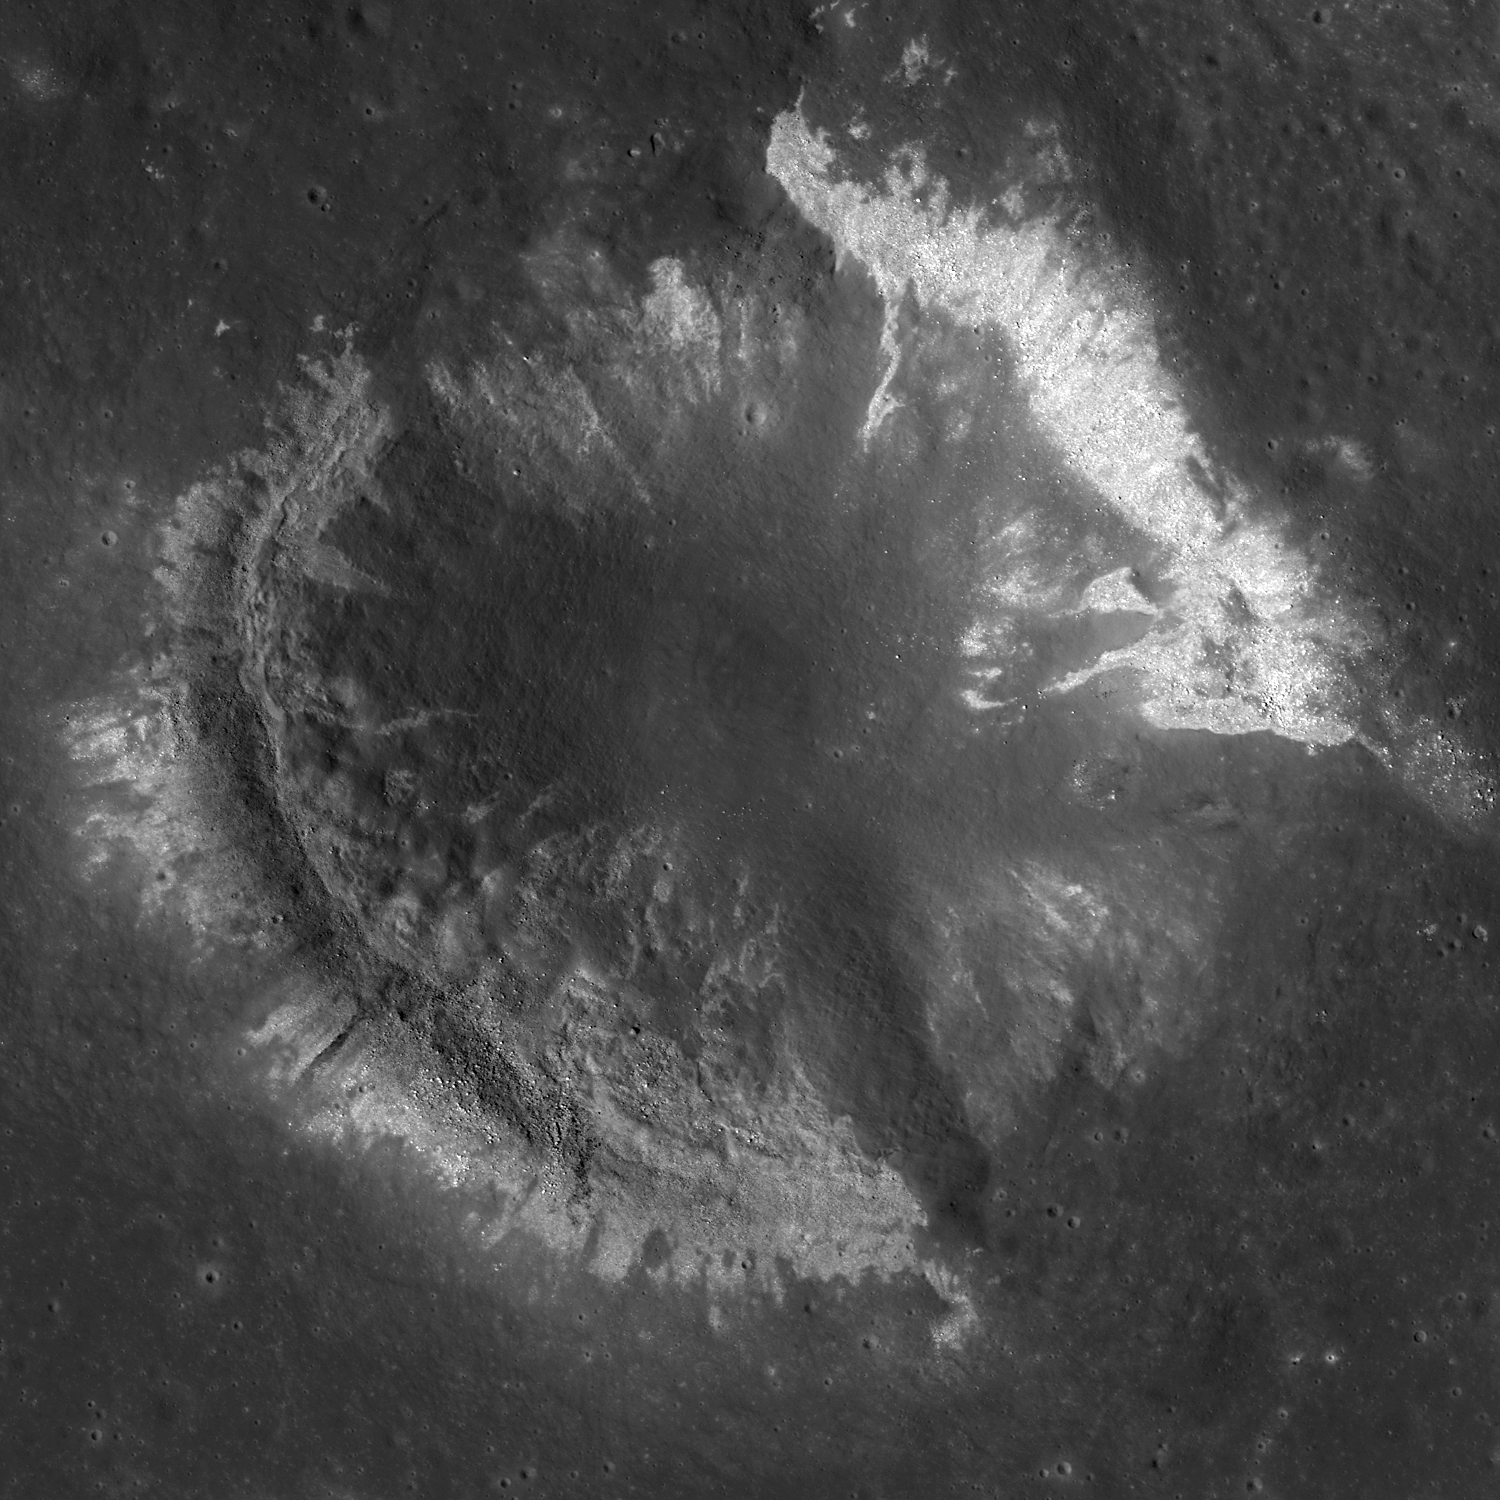 Wrinkle Ridge vs. Impact Crater